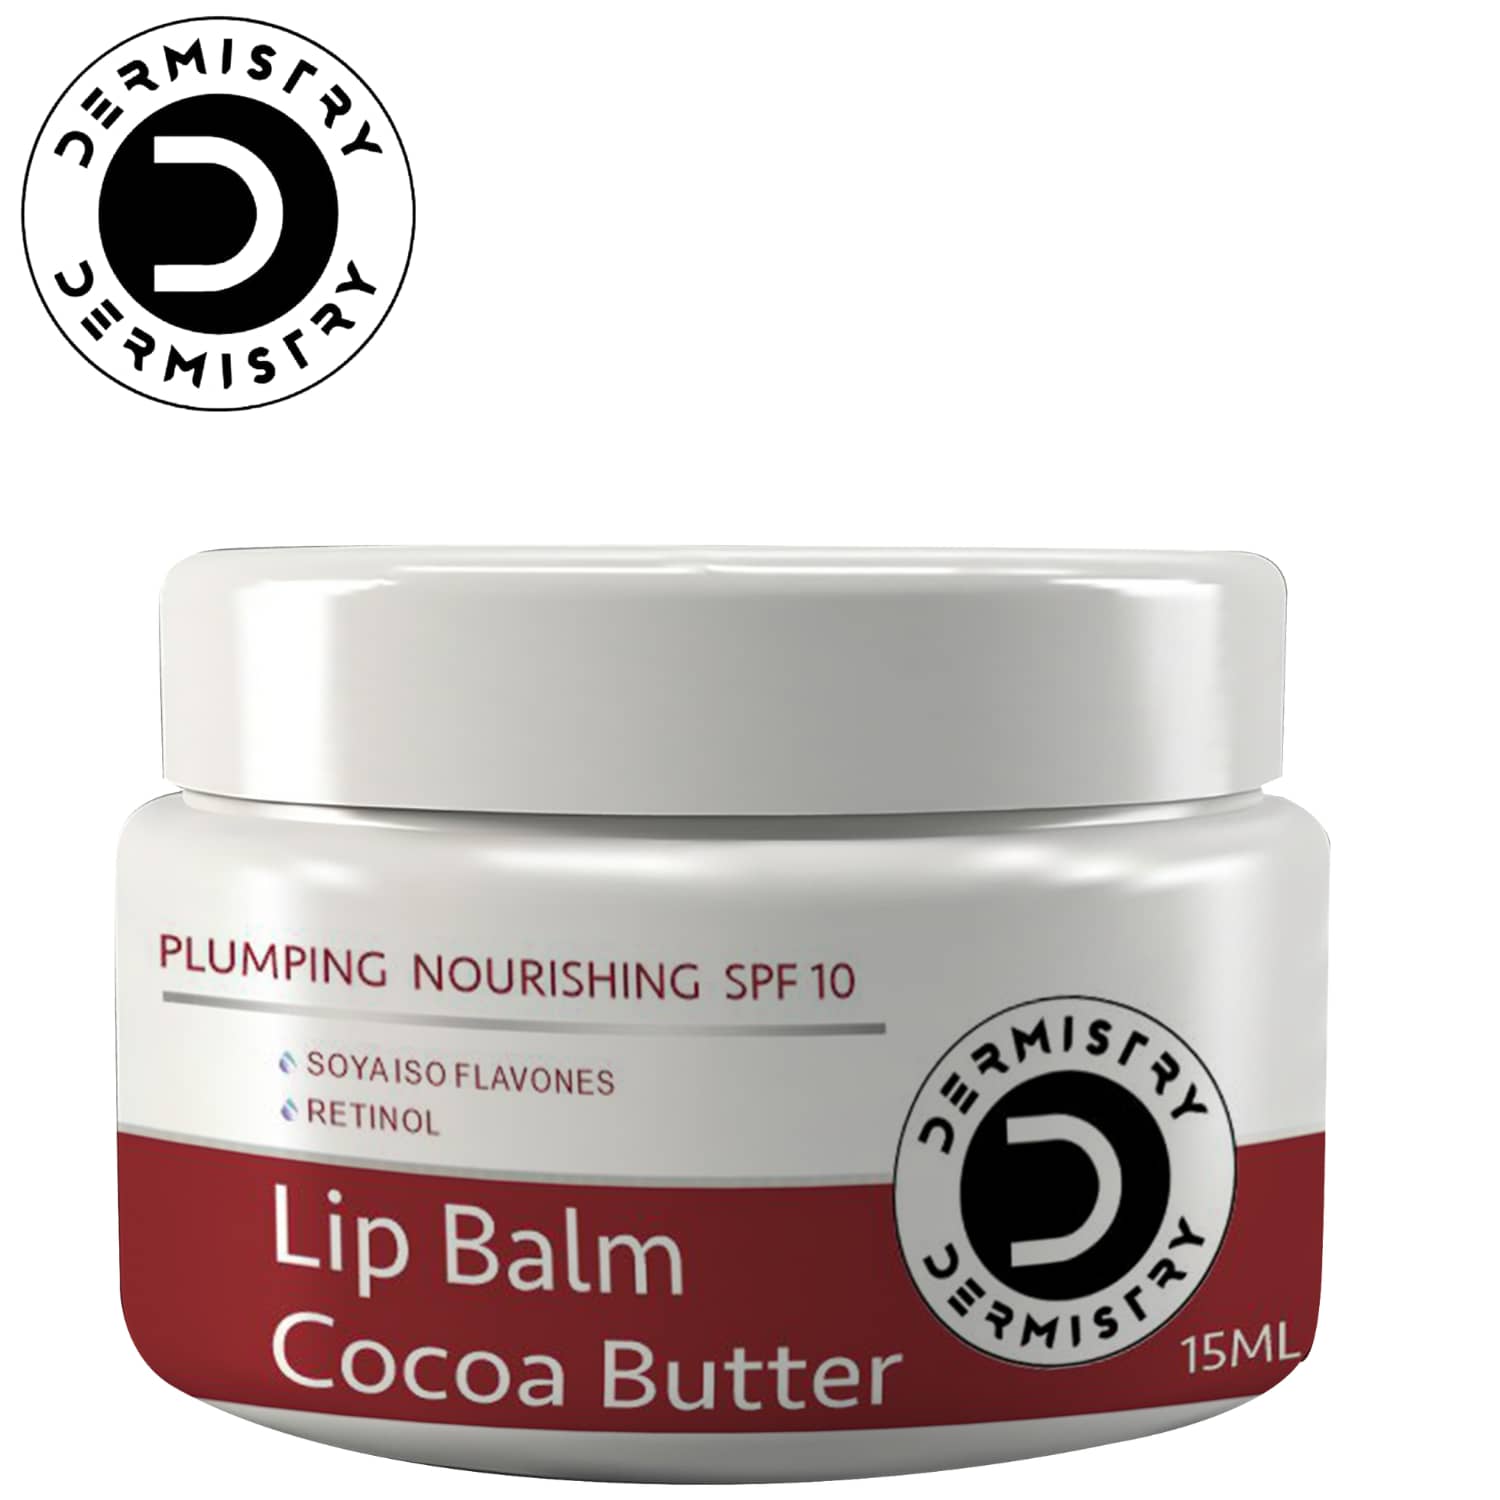 Dermistry Cocoa Butter Lip Care Tint Balm Plumping Nourishing Retinol SPF 10 for Glossy Lips-15ml